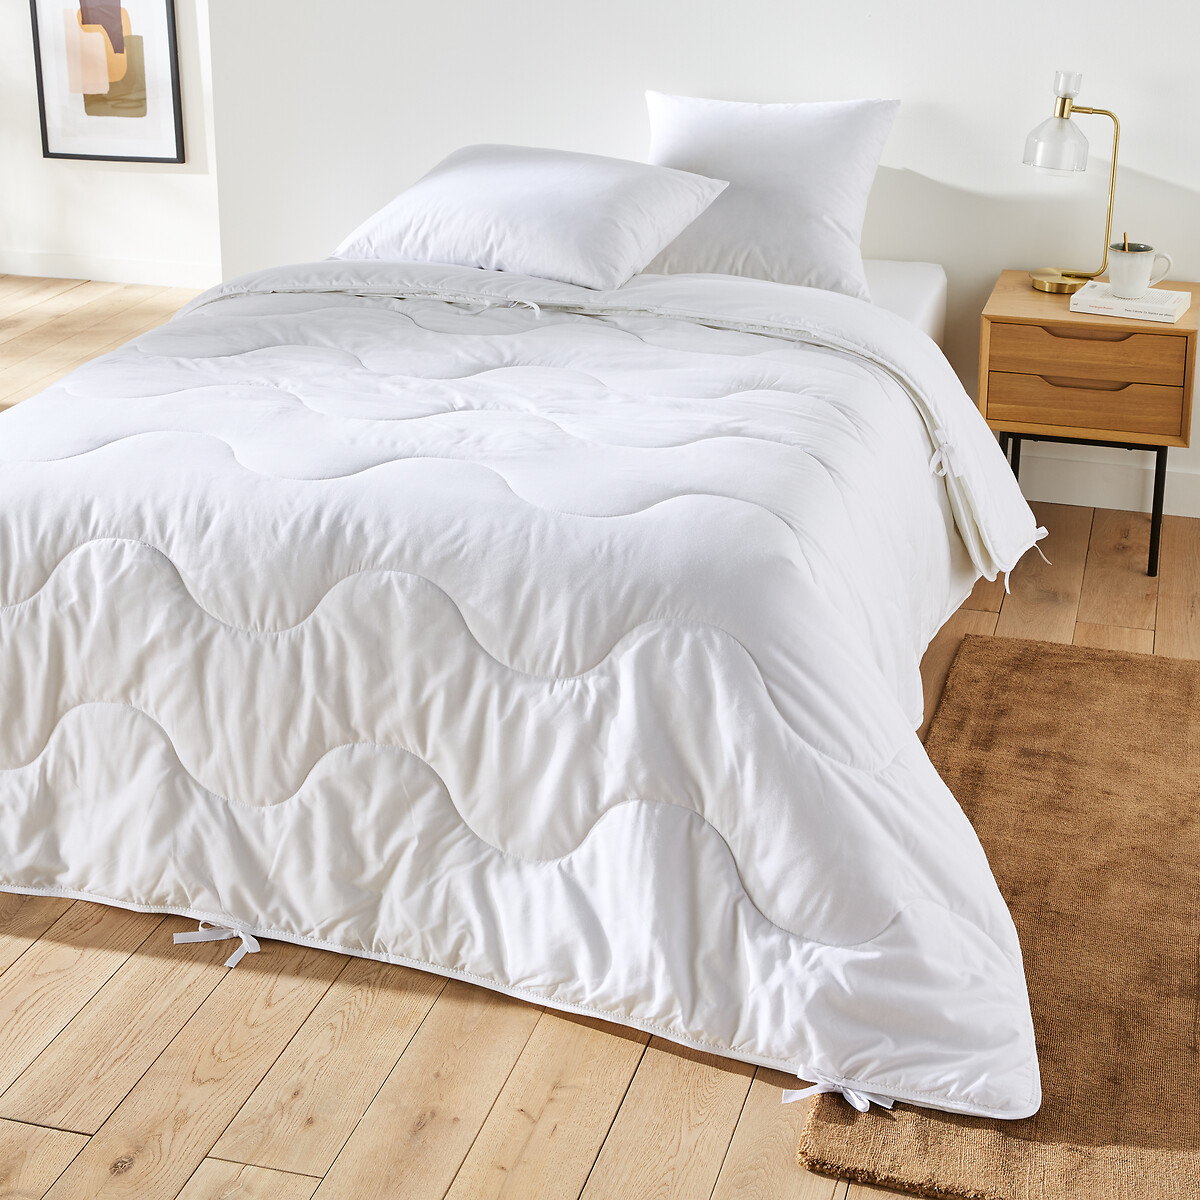 Одеяло La Redoute Двойное  гм   гм с обработкойProneem 260 x 240 см белый, размер 260 x 240 см - фото 1